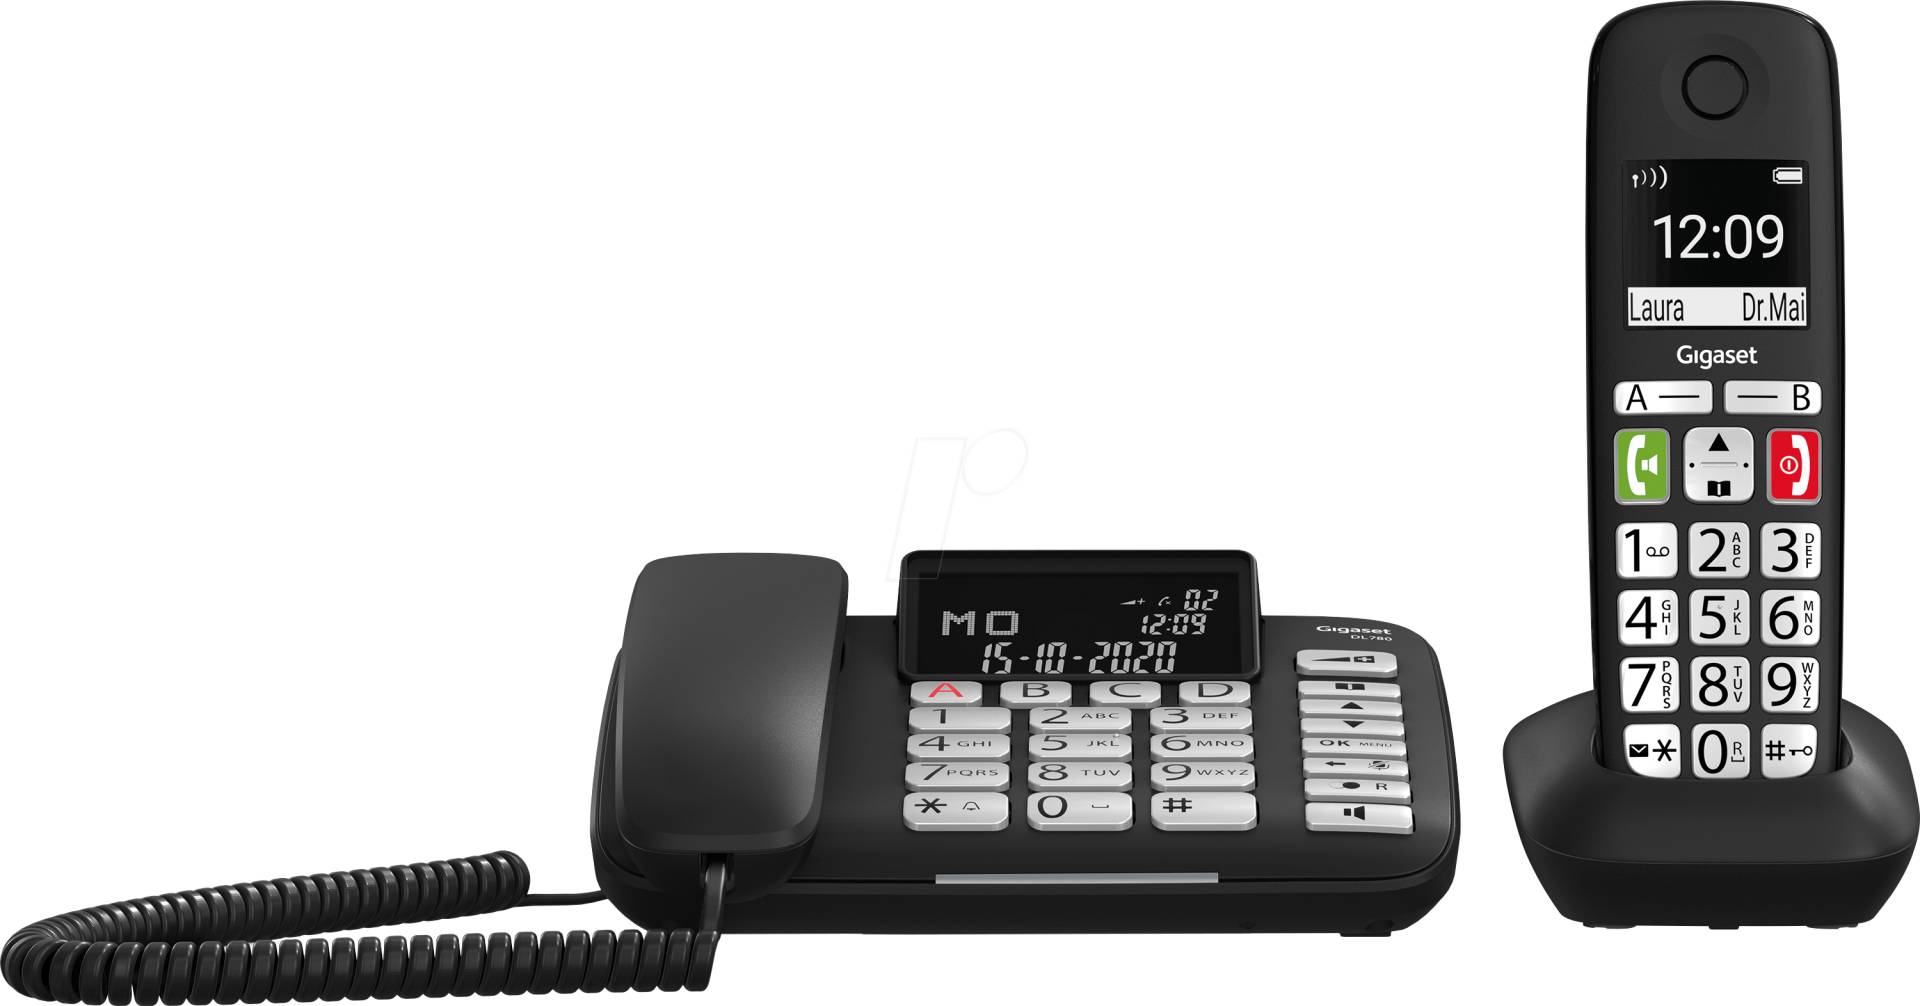 GIGASET DL780P - Telefon, Kombi Tischtelefon/DECT von GIGASET COMMUNICATIONS